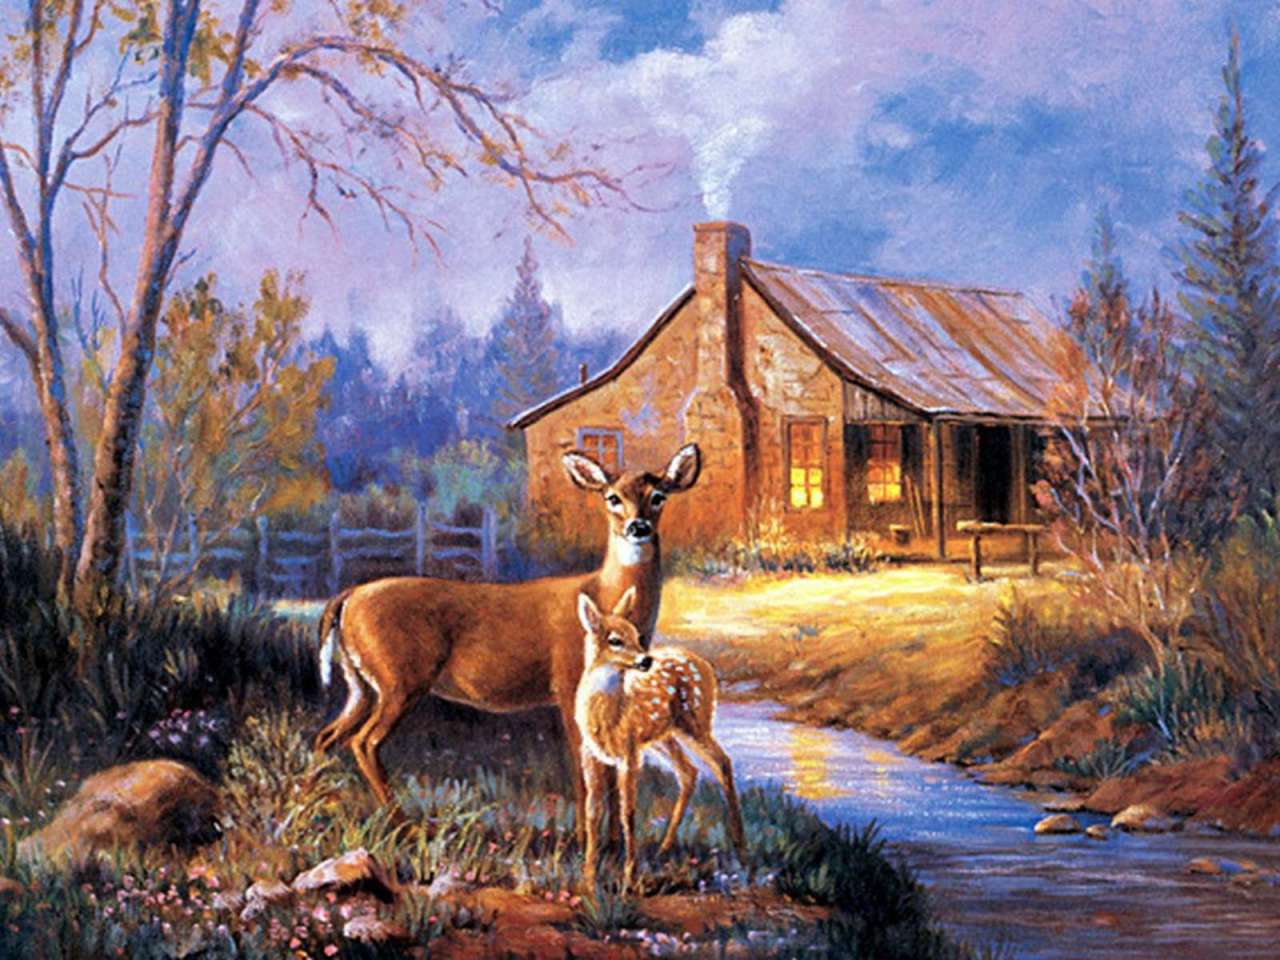 Brian wallpaper, deer wallpaper, whitetail deer wallpaper, deer